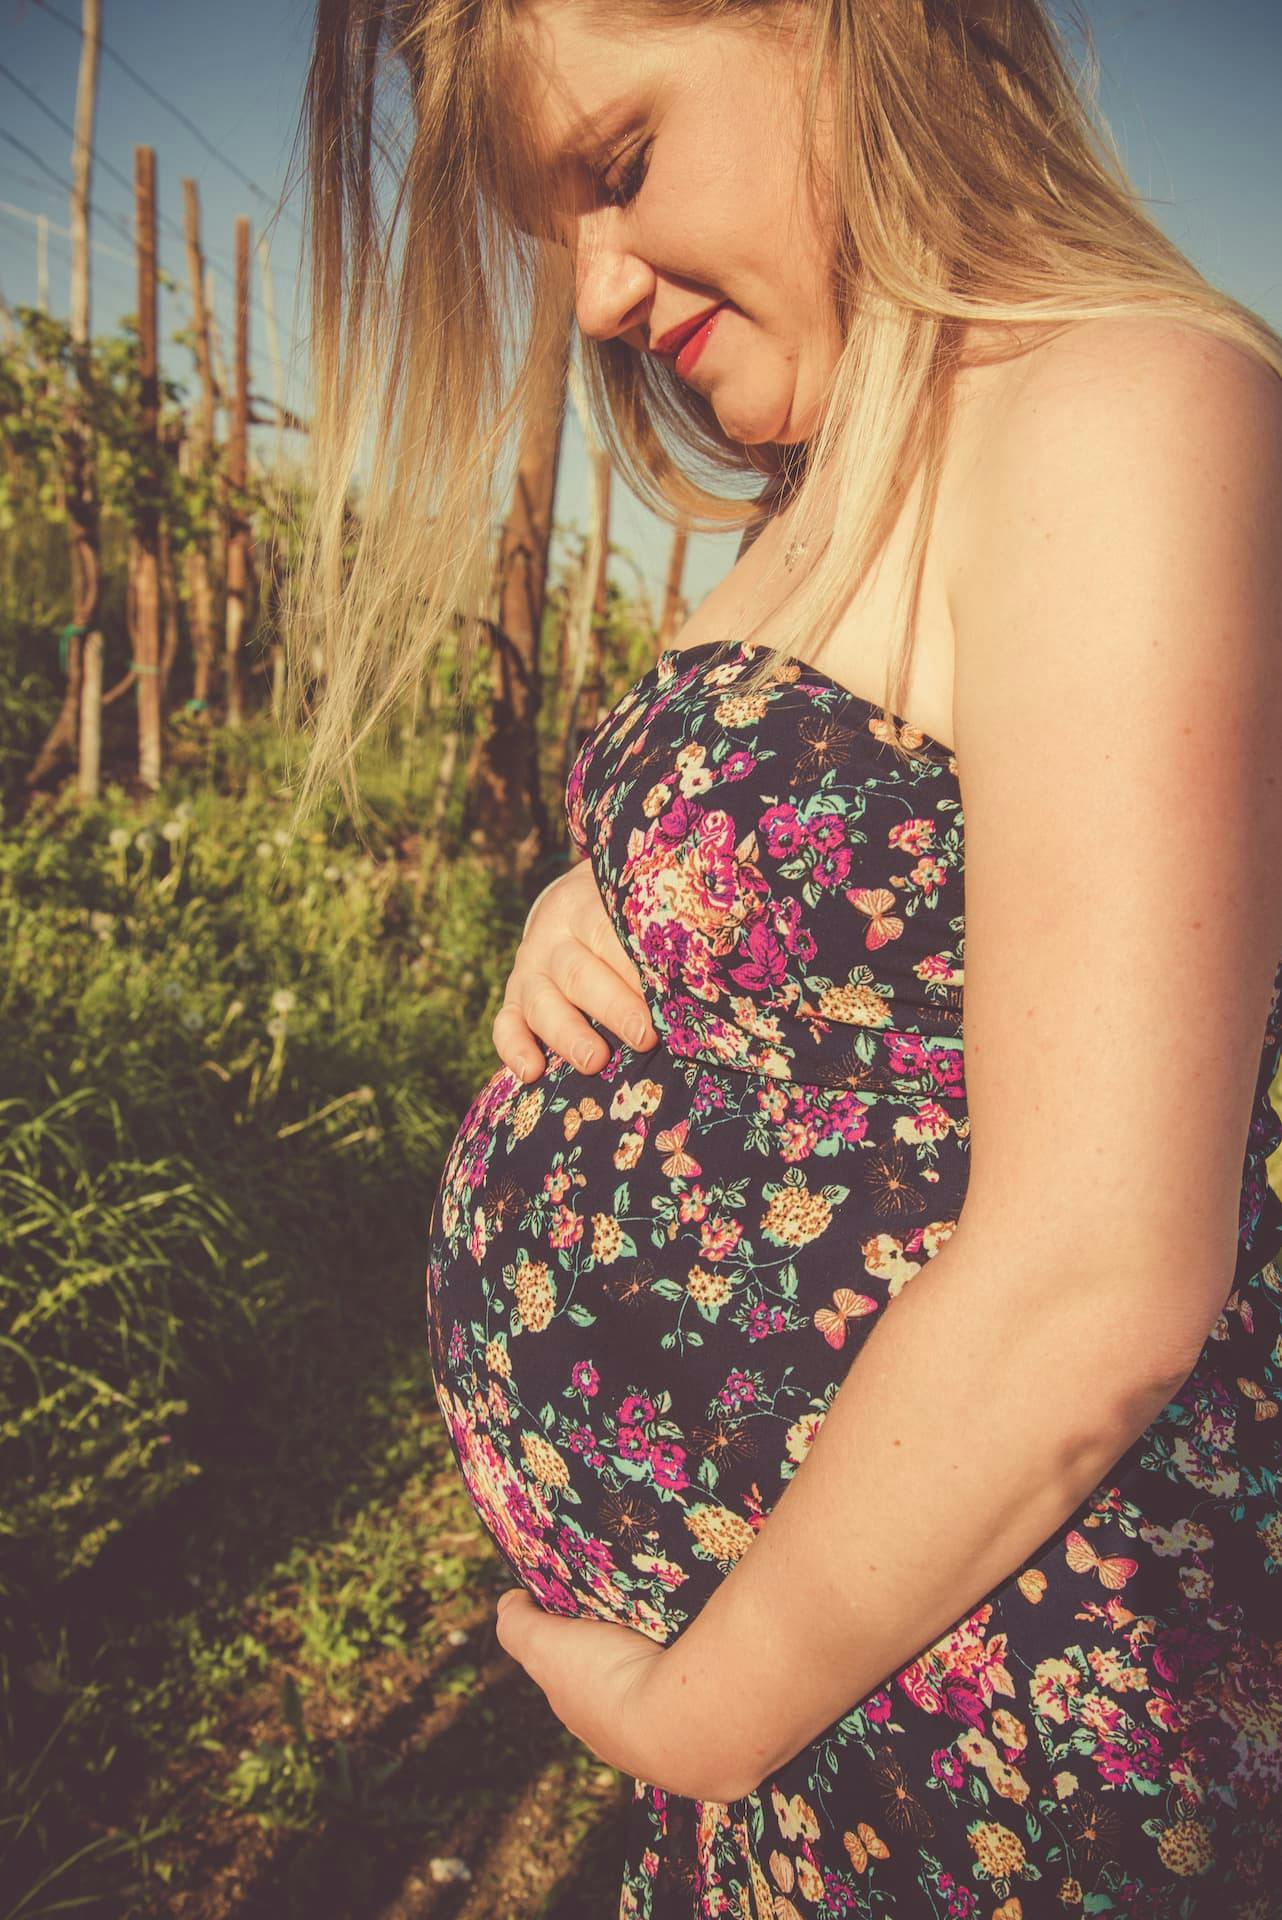 maternity donna gravidanza vigneto valdobbiadene tramonto